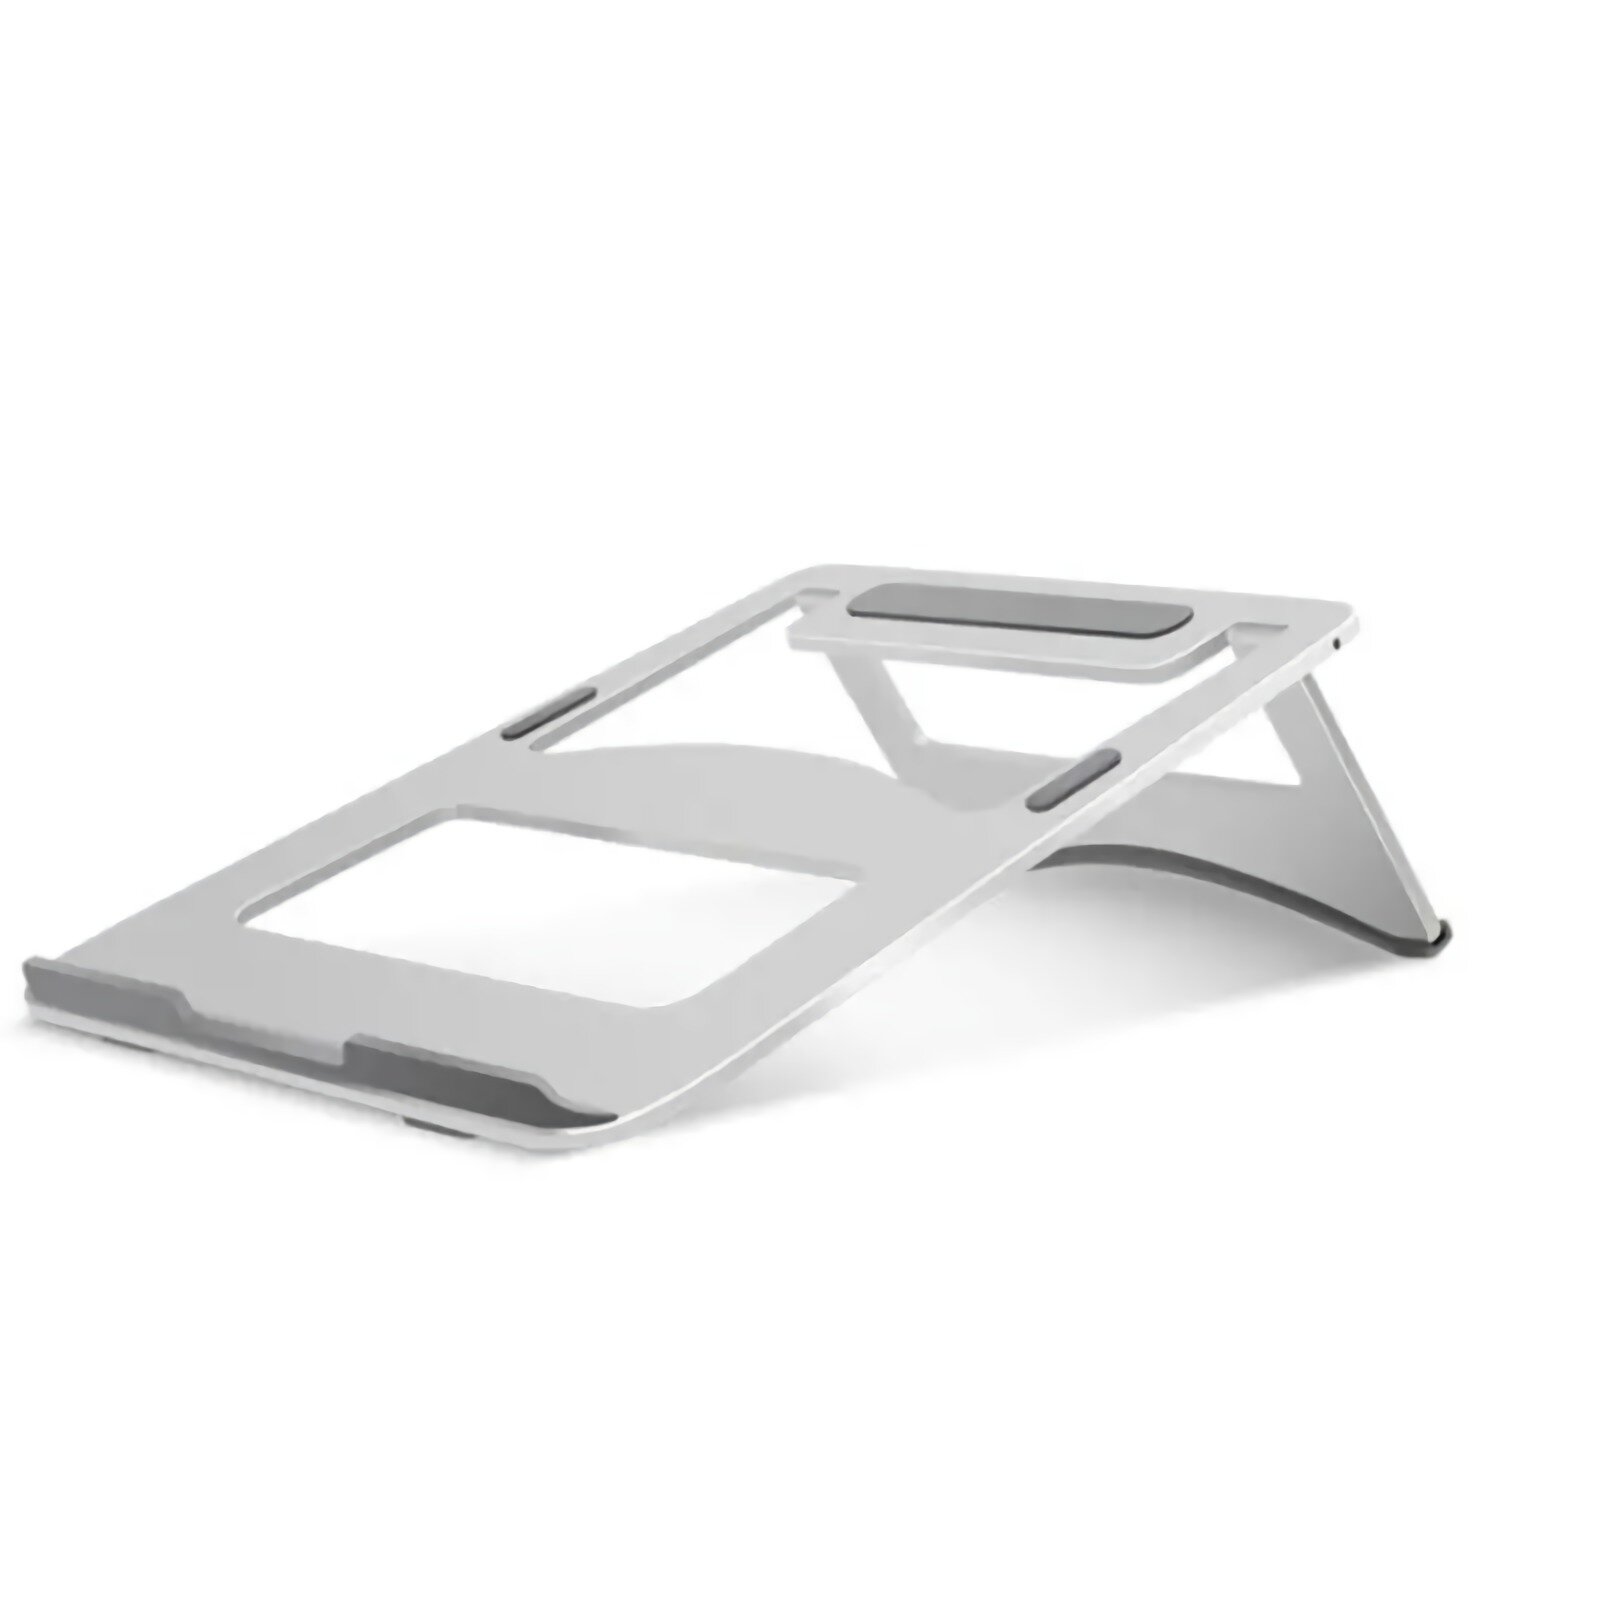 Hoge kwaliteit draagbare laptopstandaard van aluminiumlegering voor MacBook-tablethouder met koelfunctie